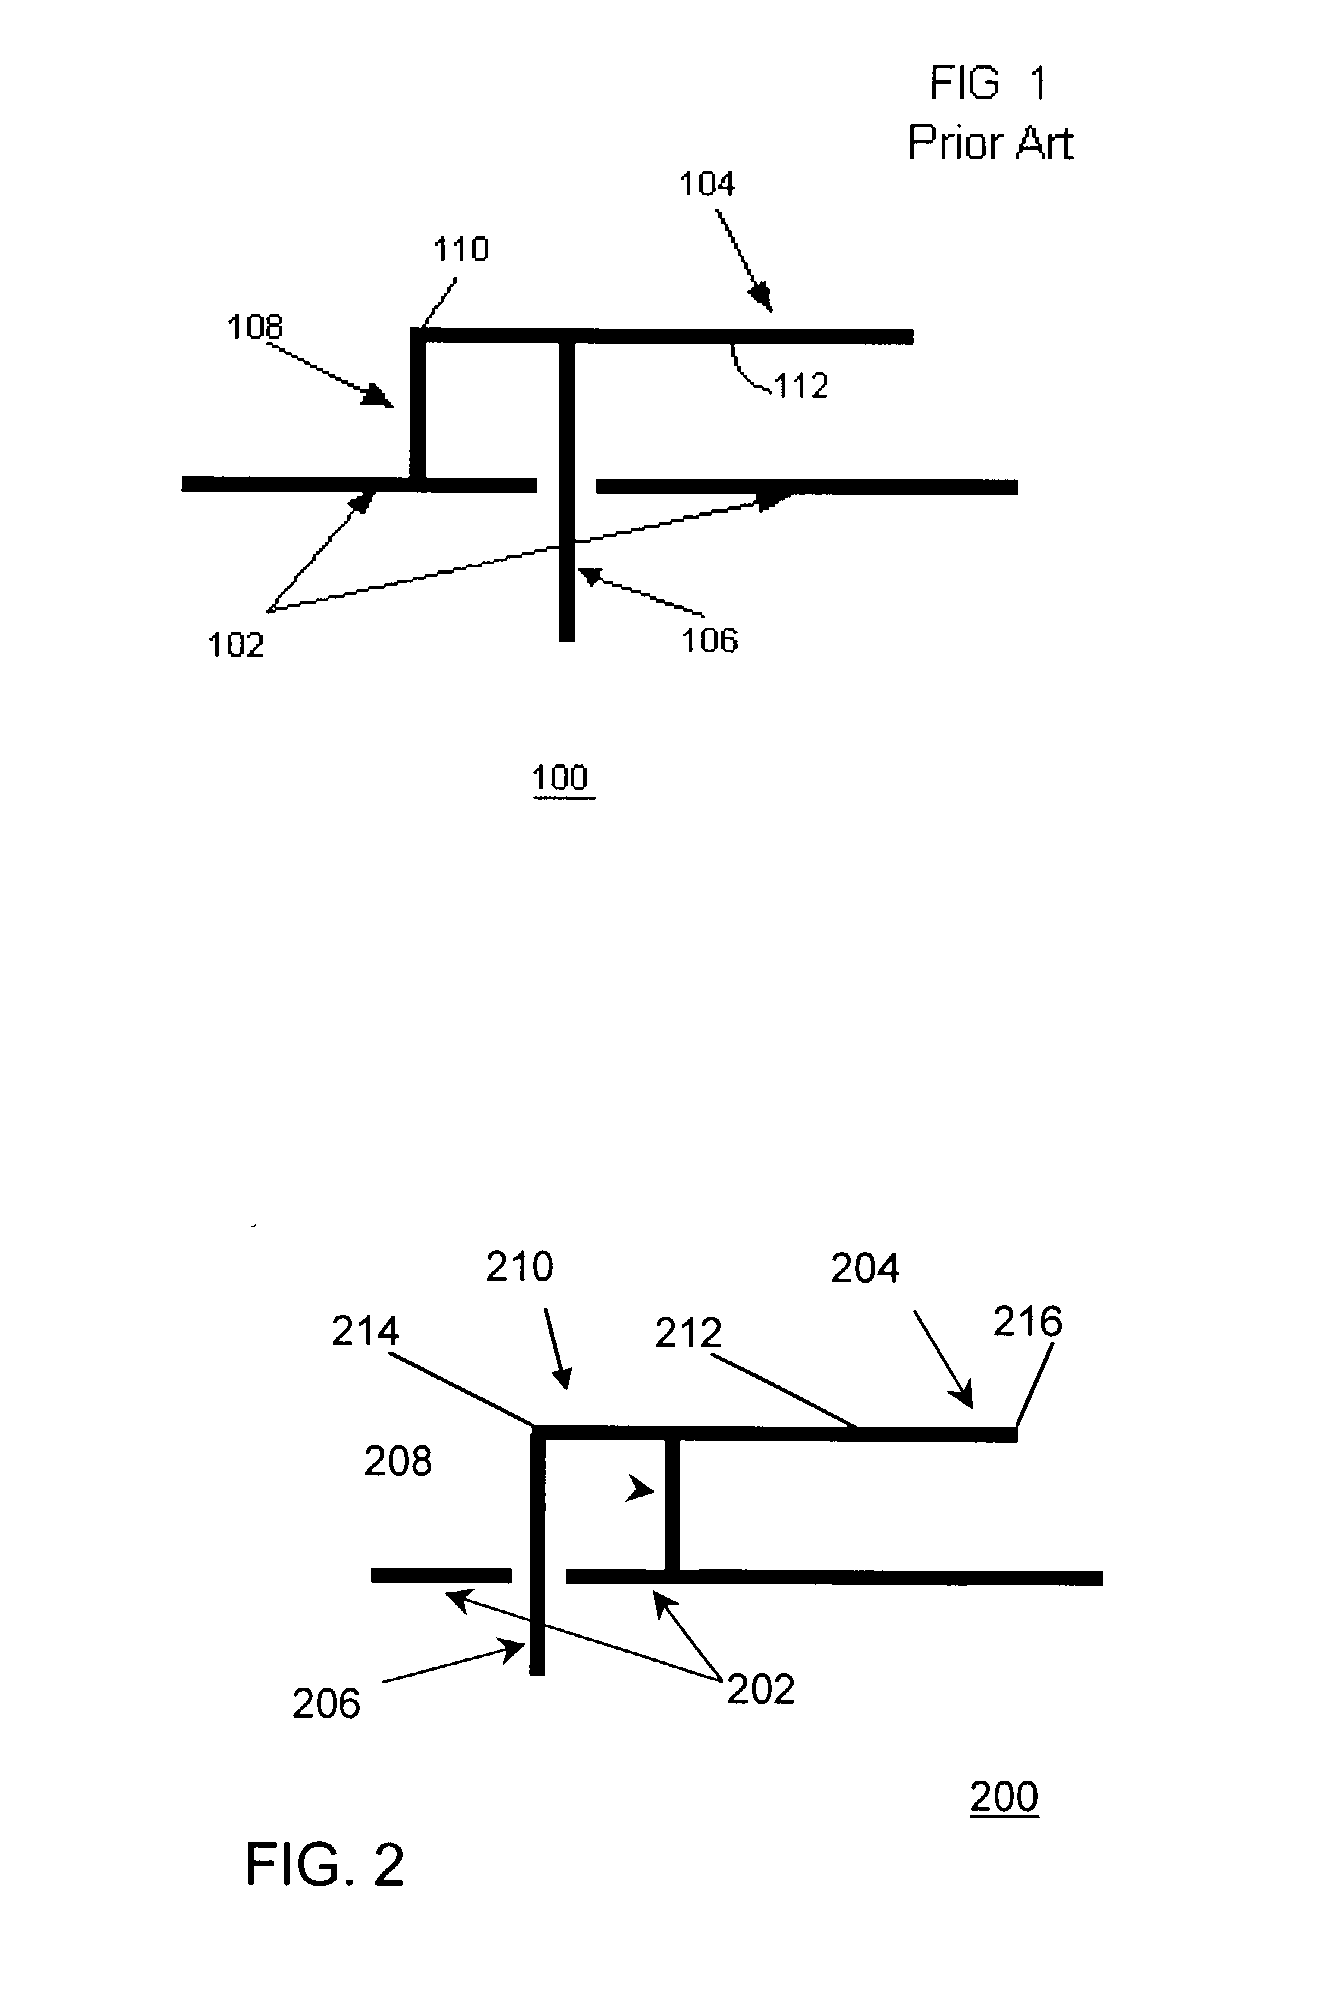 Miniaturized reverse-fed planar inverted F antenna